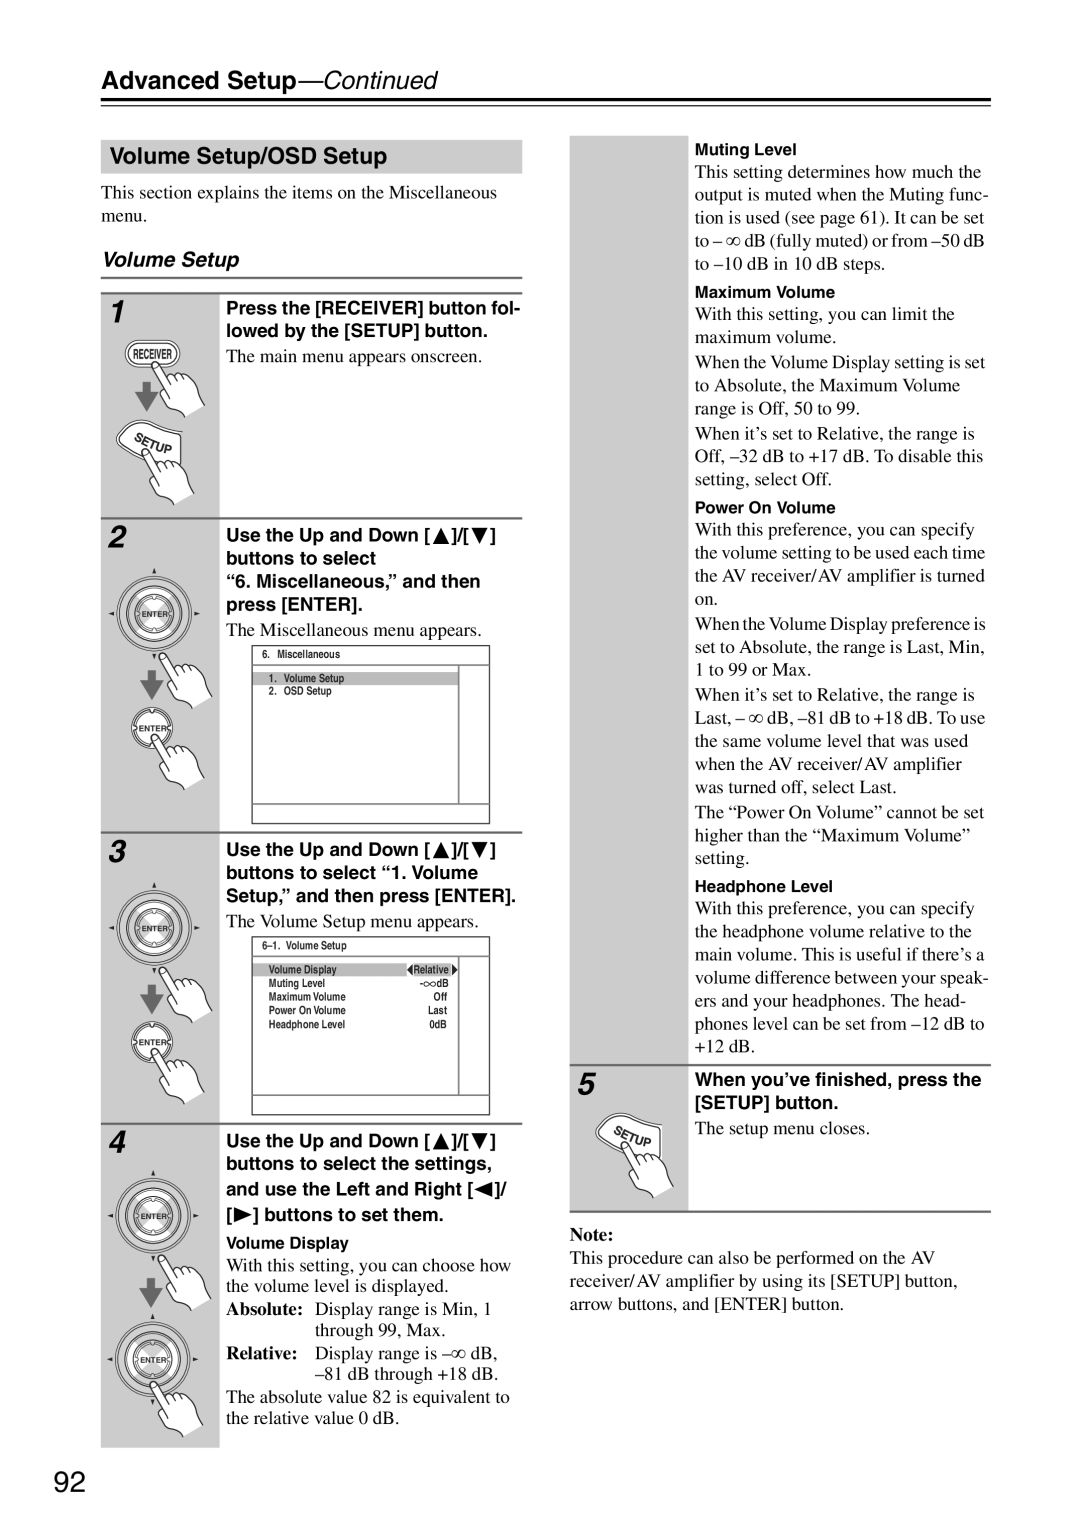 Onkyo TX-SA705 instruction manual Advanced Setup—Continued, Volume Setup/OSD Setup 